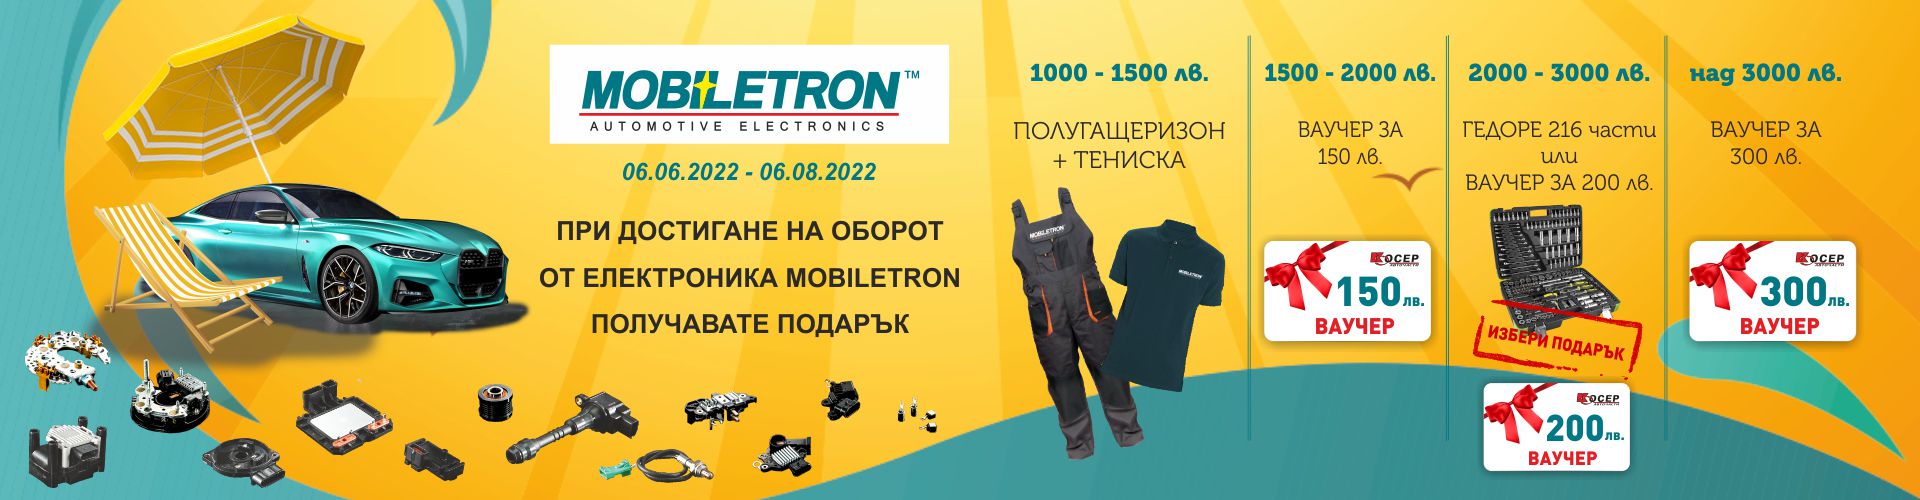 promo_mobiletron_06.06.2022-06.08.2022_banner.jpg